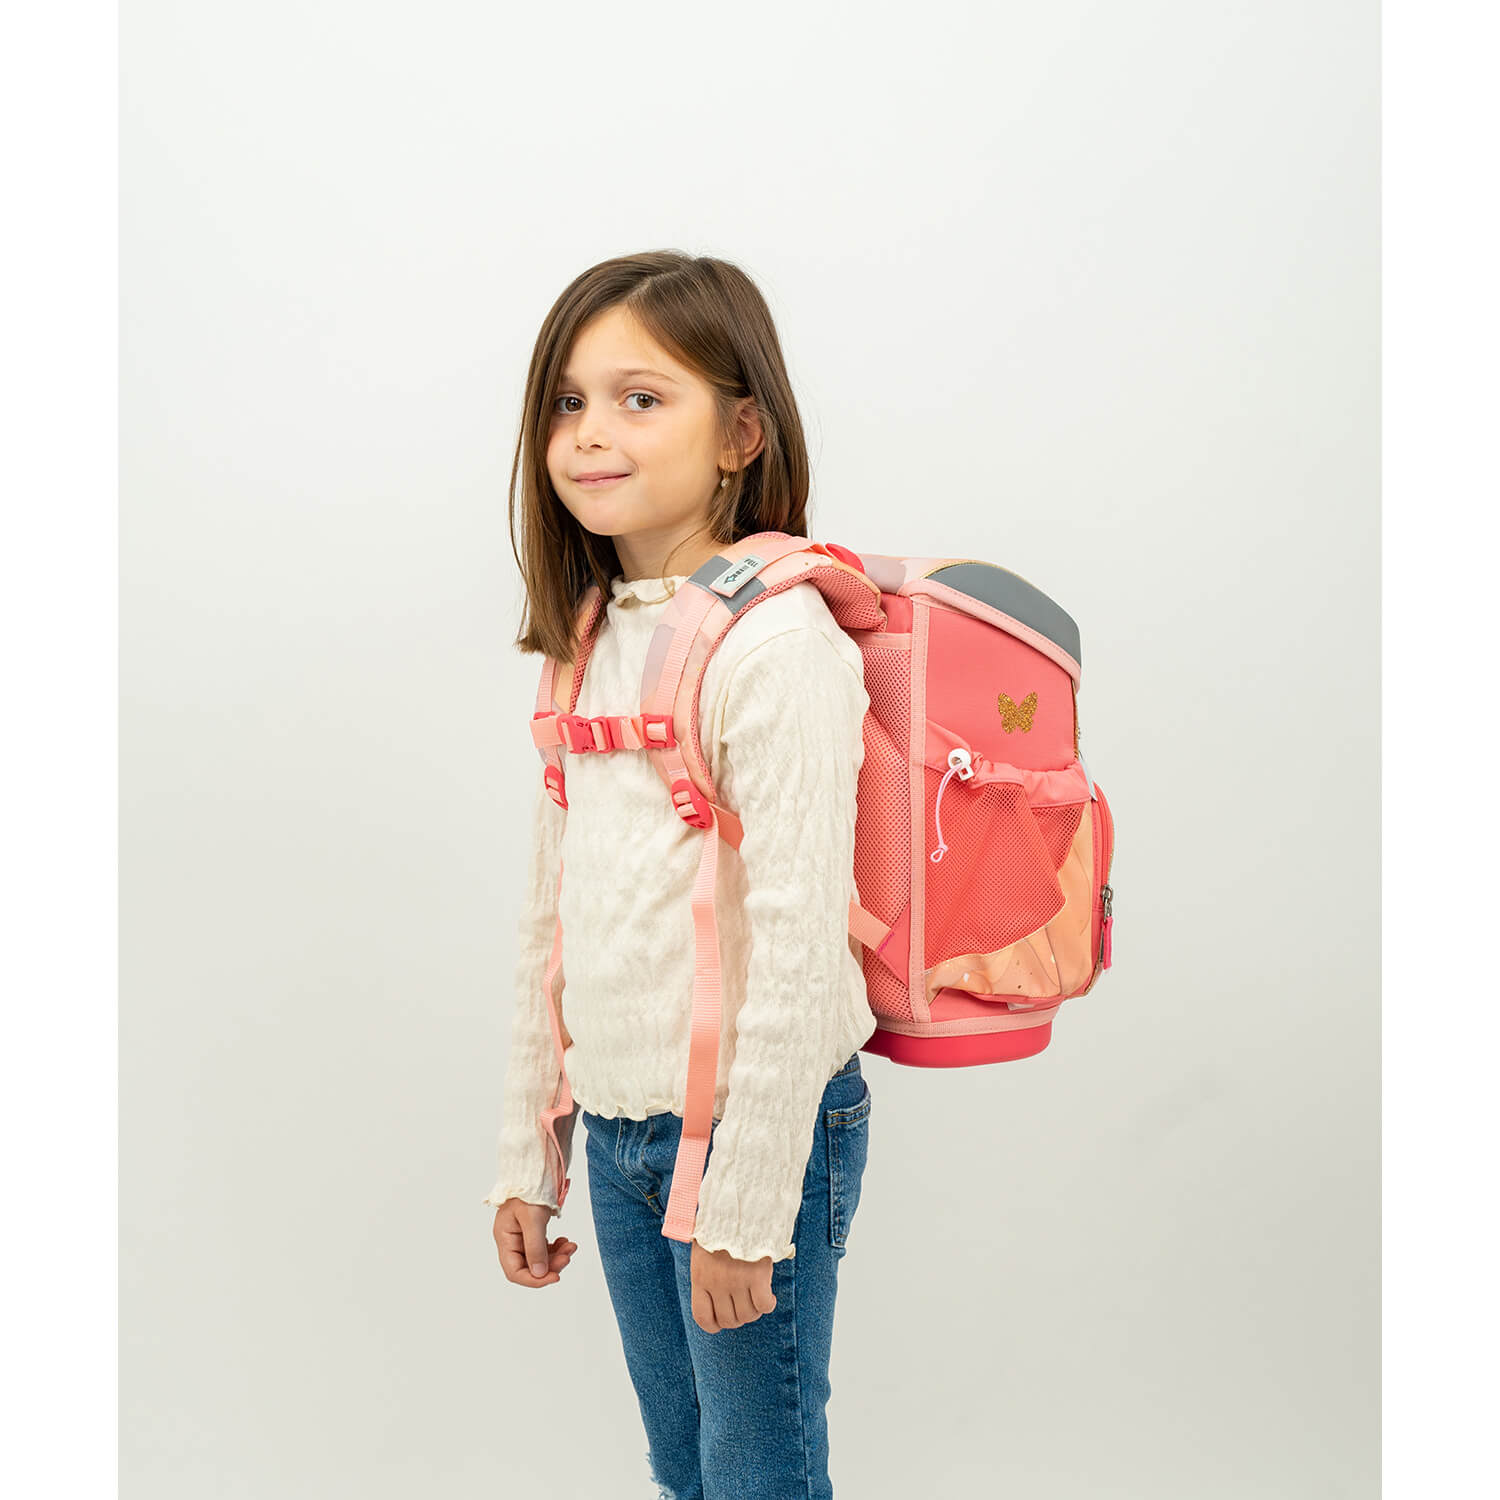 Mini-Fit Marble schoolbag set 5 pcs with GRATIS keychain